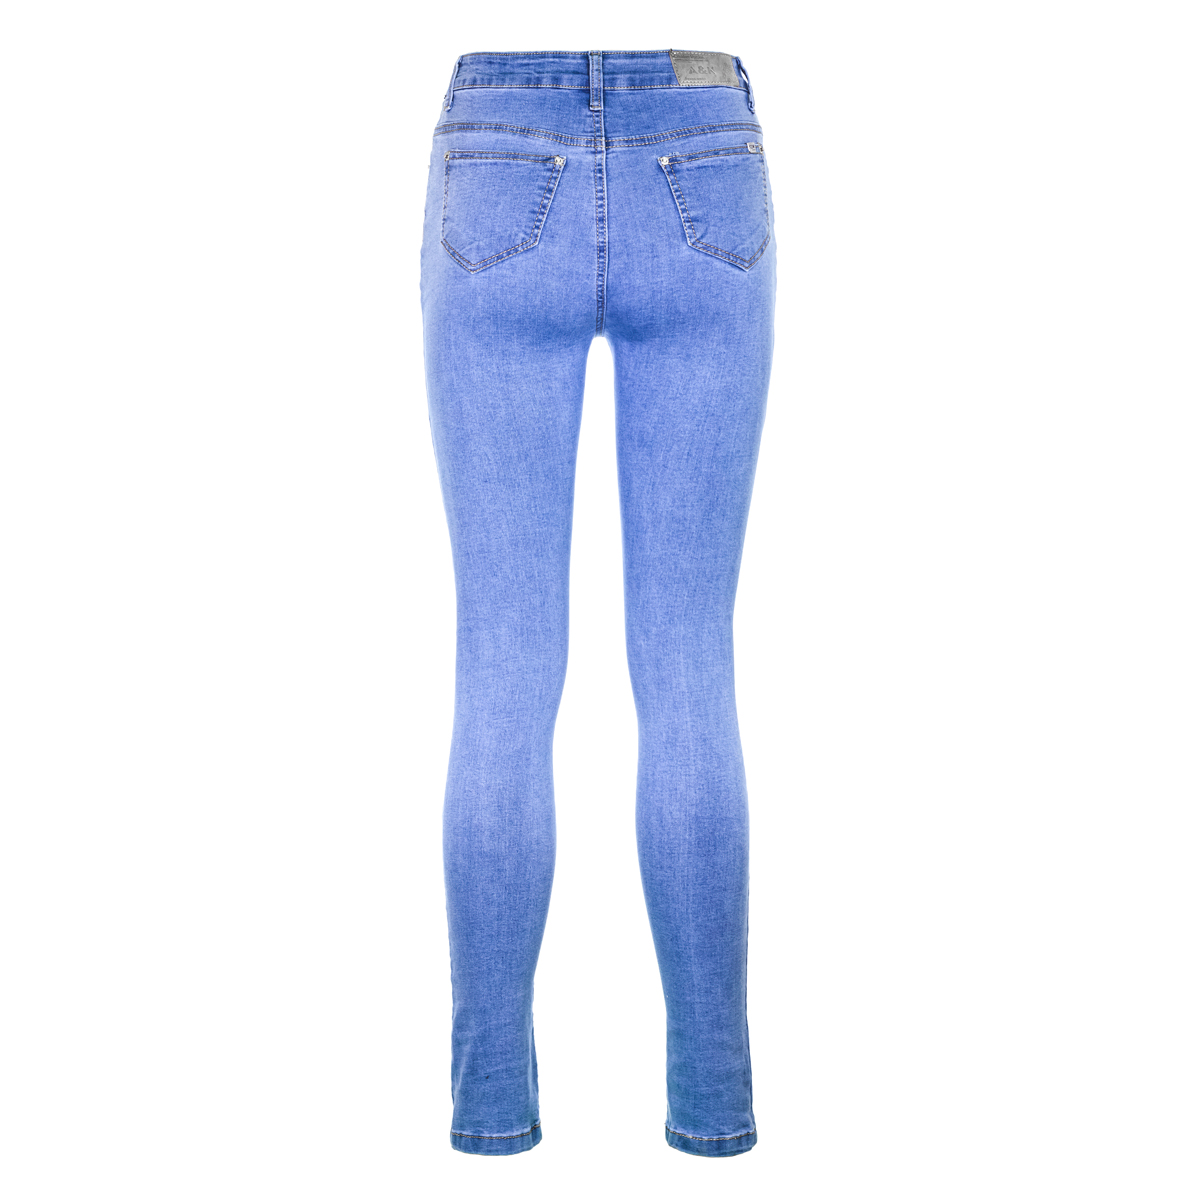 Жен. джинсы арт. 12-0155 Голубой р. 30 Китай, размер 30 - фото 3